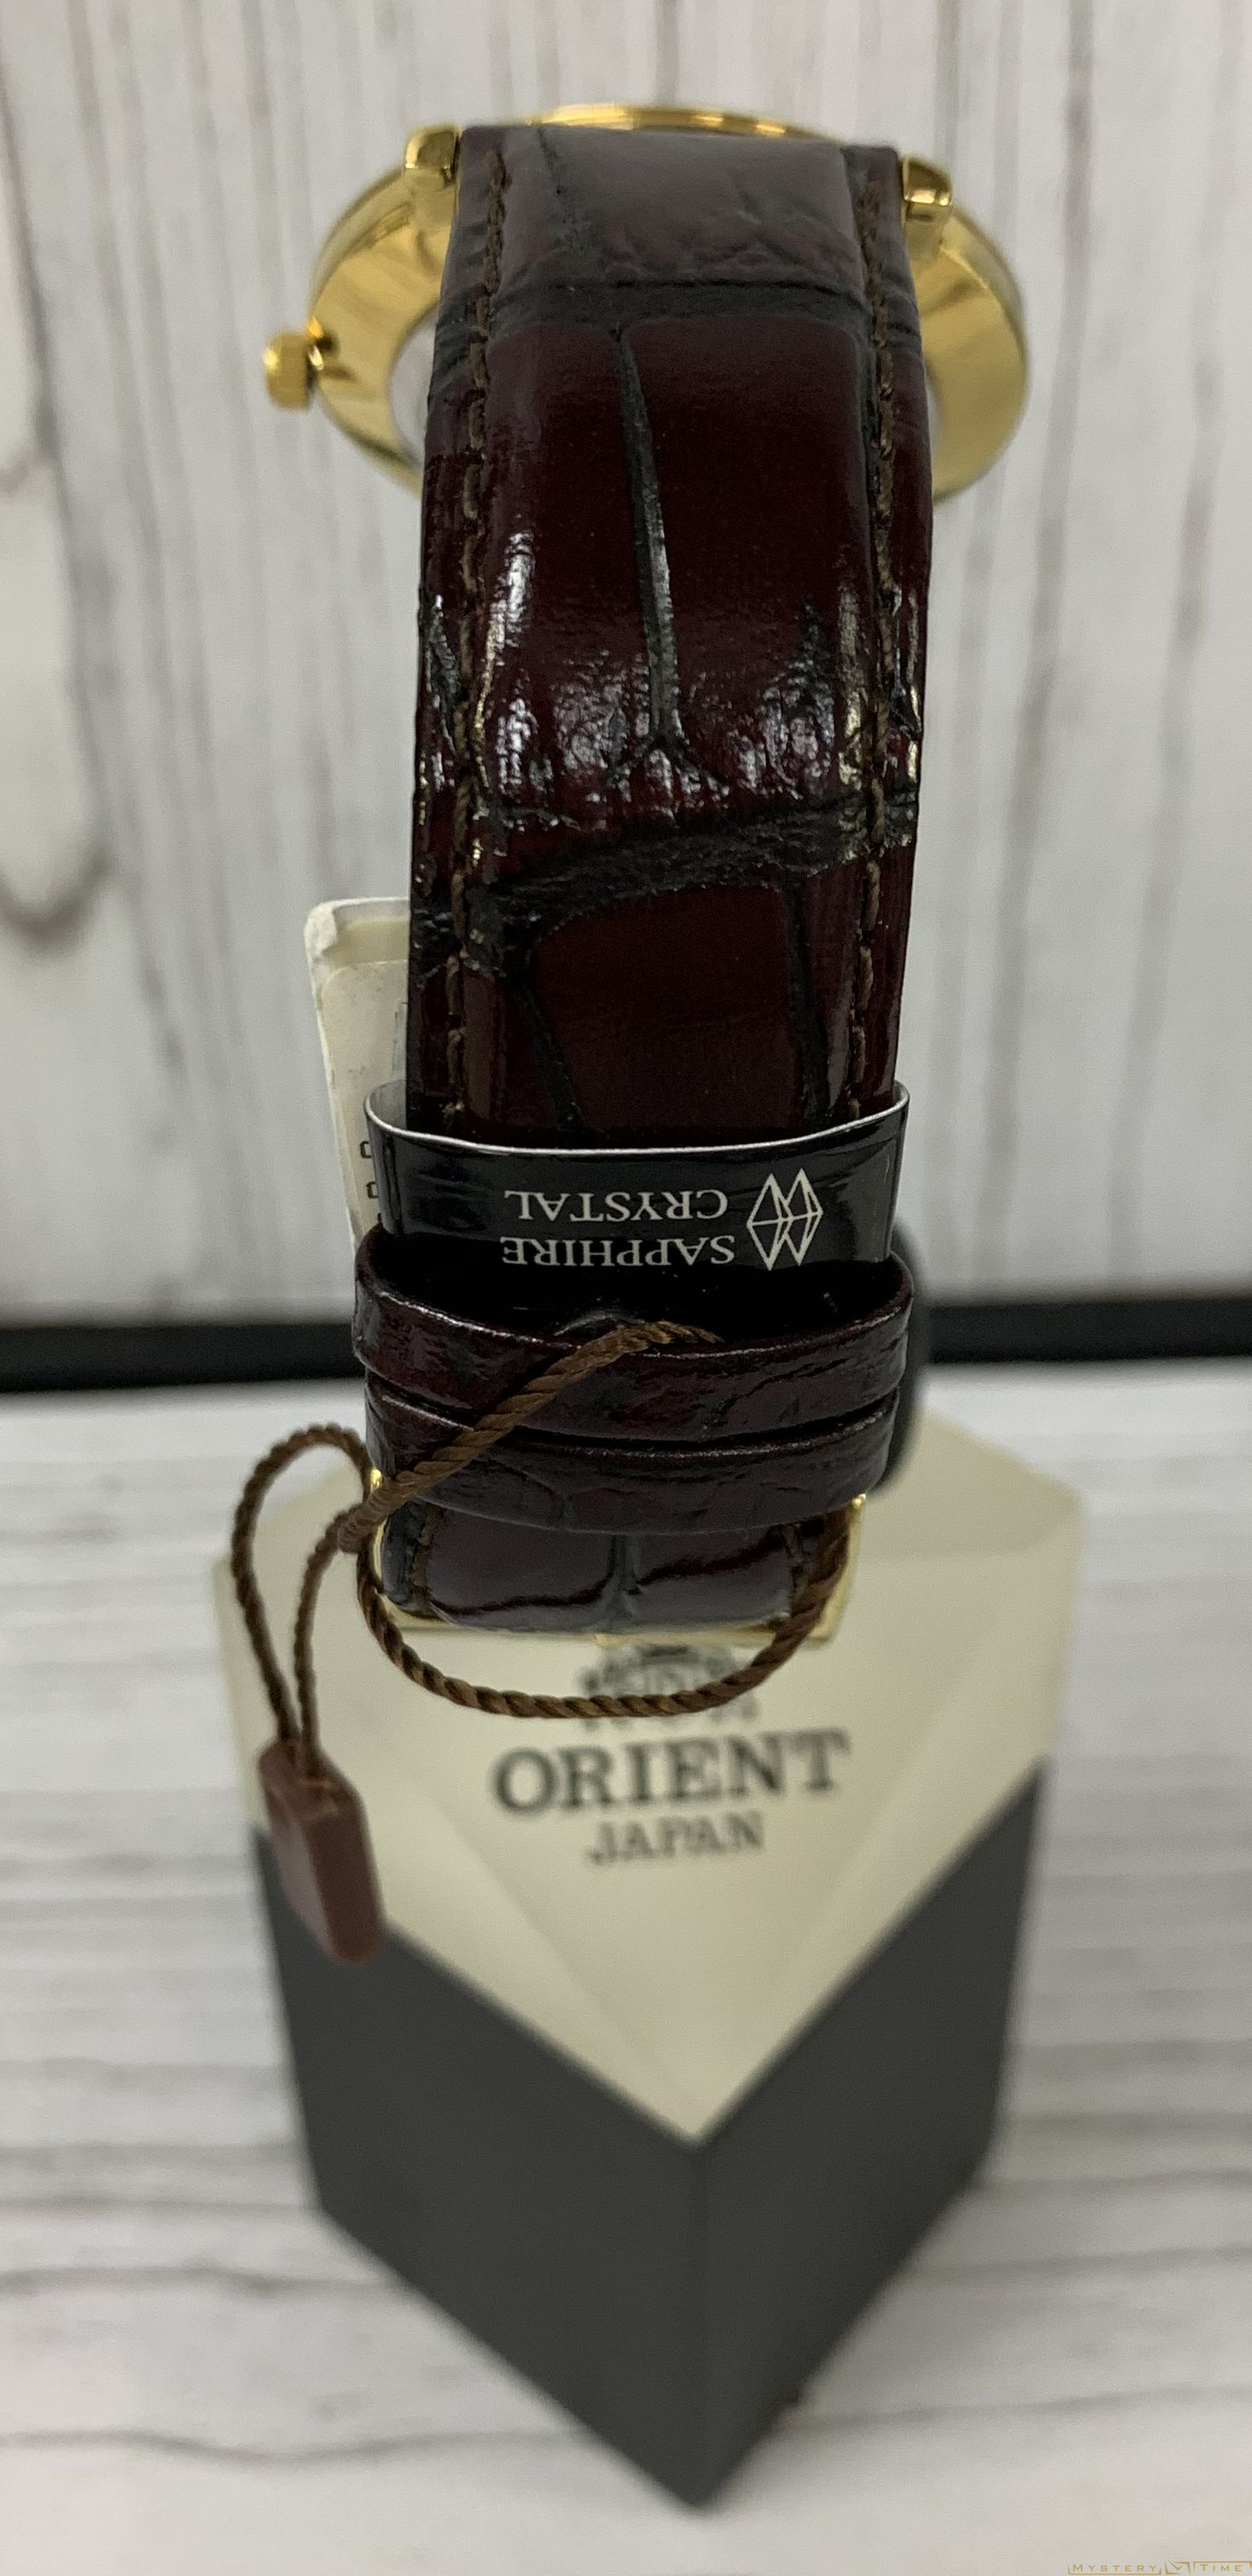 Orient GW01008W